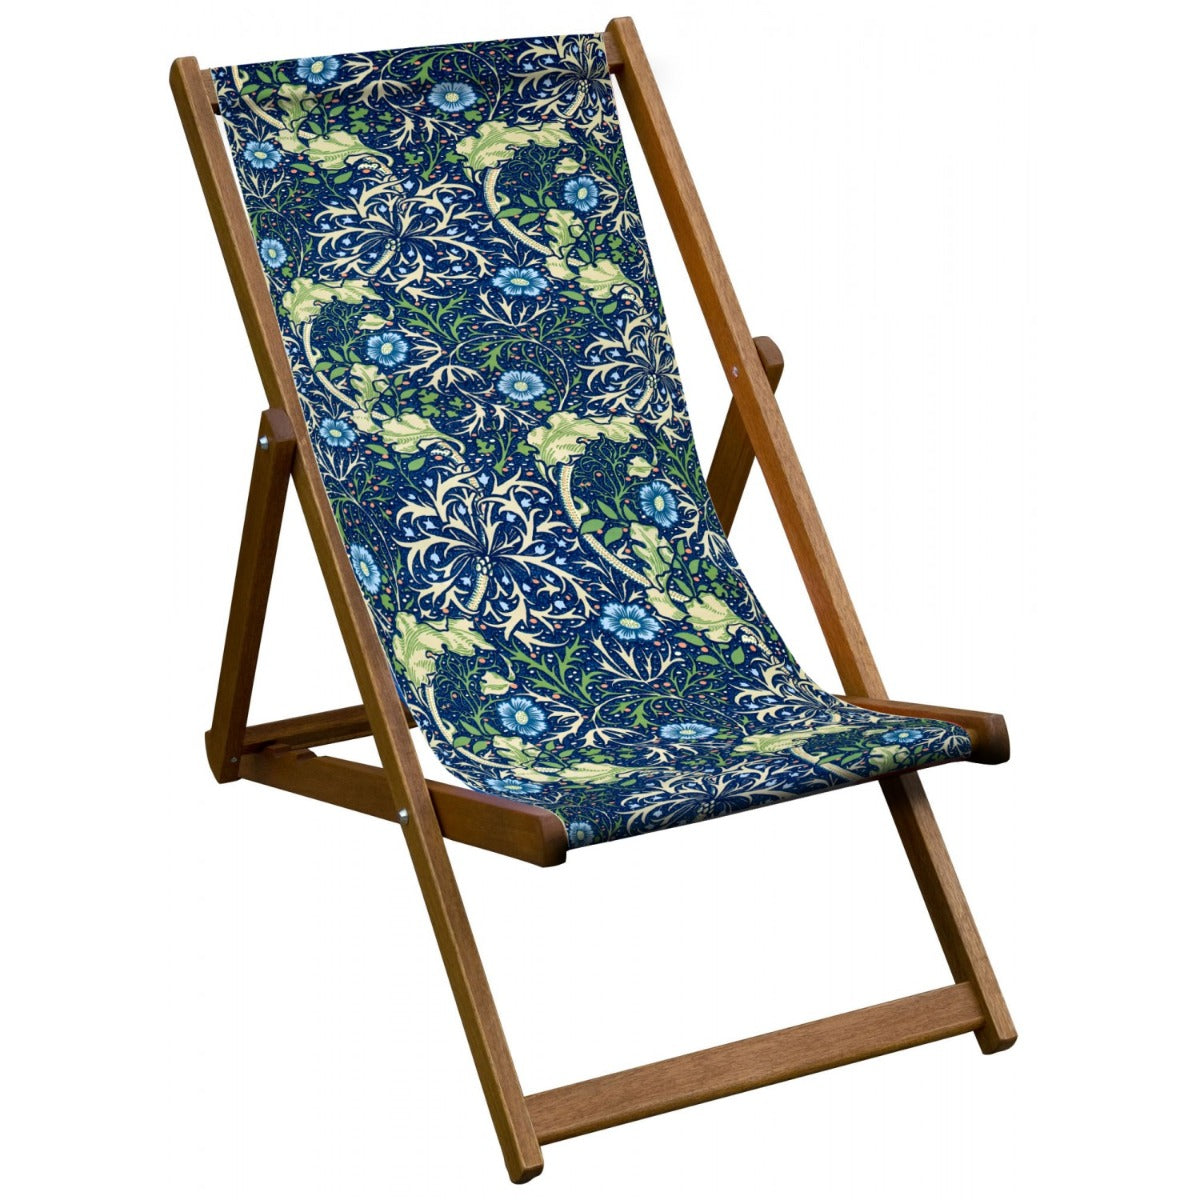 Vintage Inspired Wooden Deckchair with William Morris 'Seaweed' Design